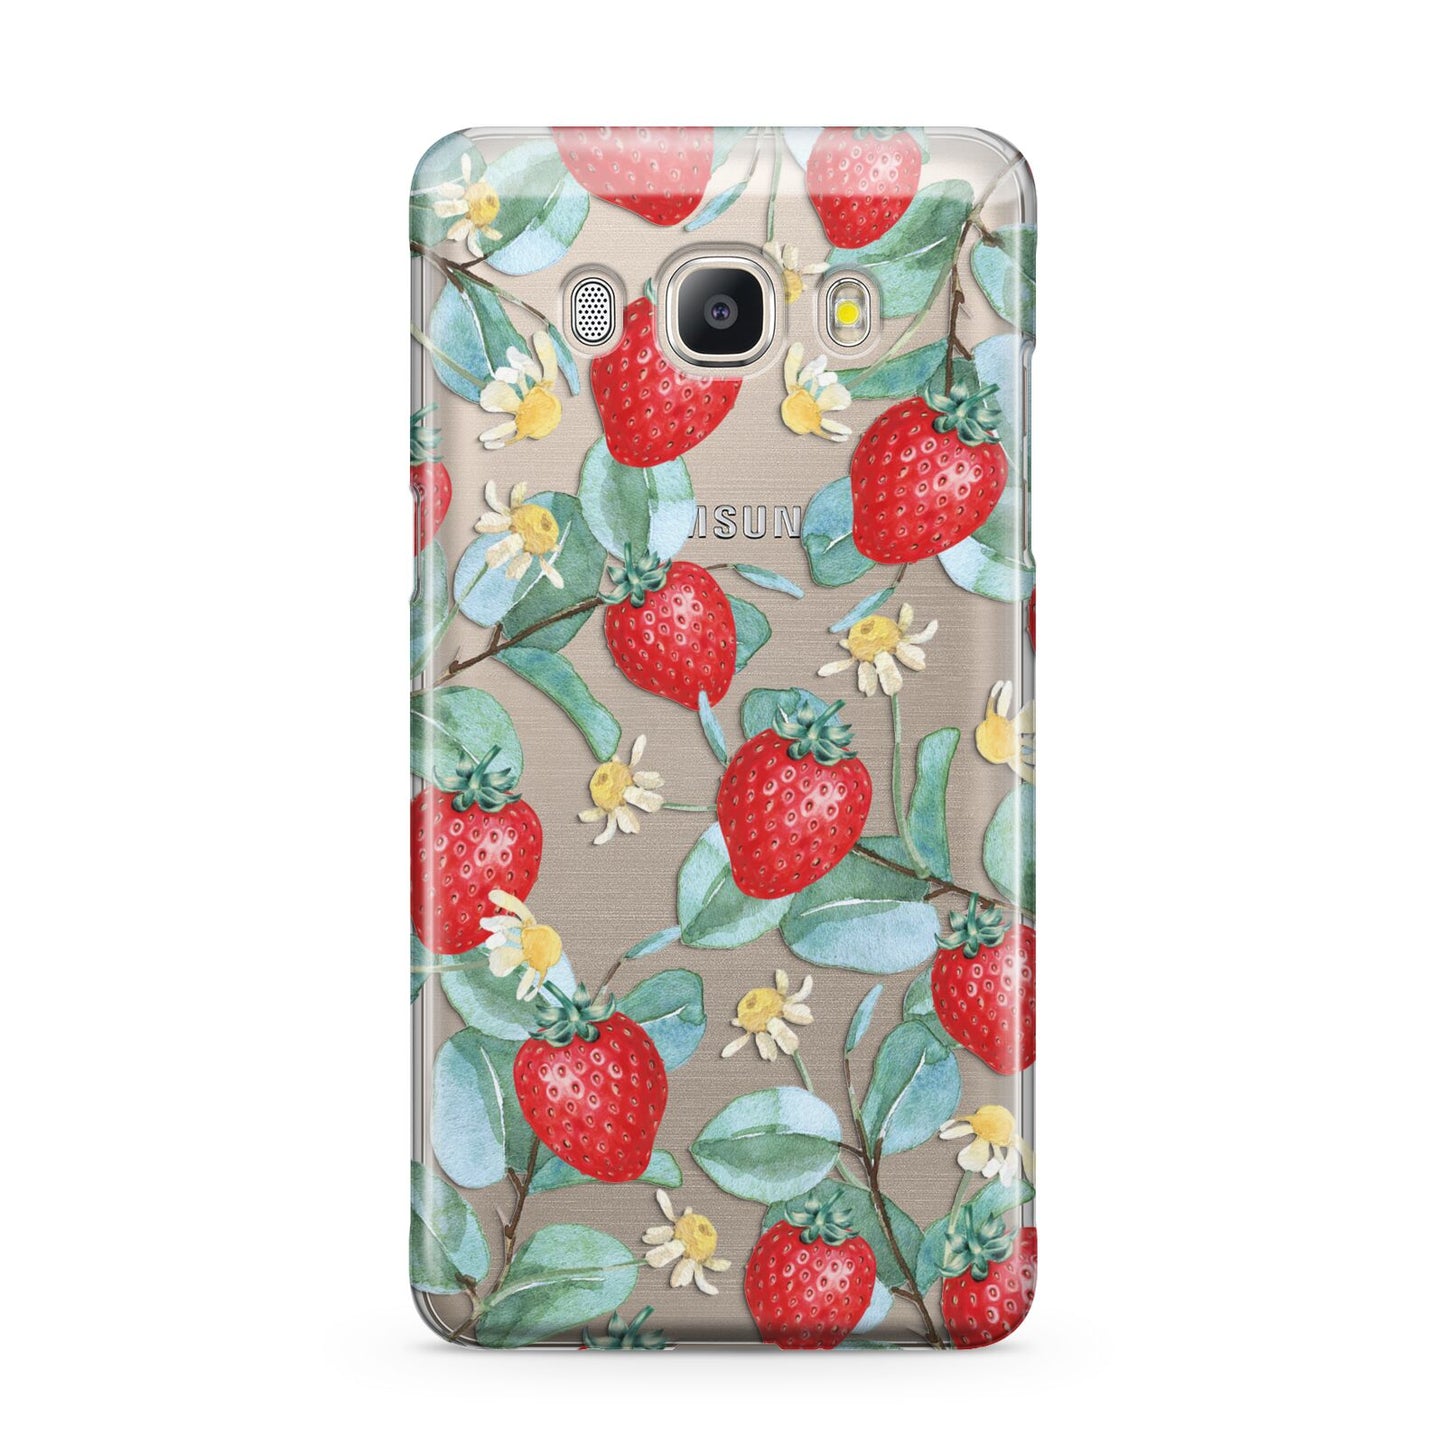 Strawberry Plant Samsung Galaxy J5 2016 Case